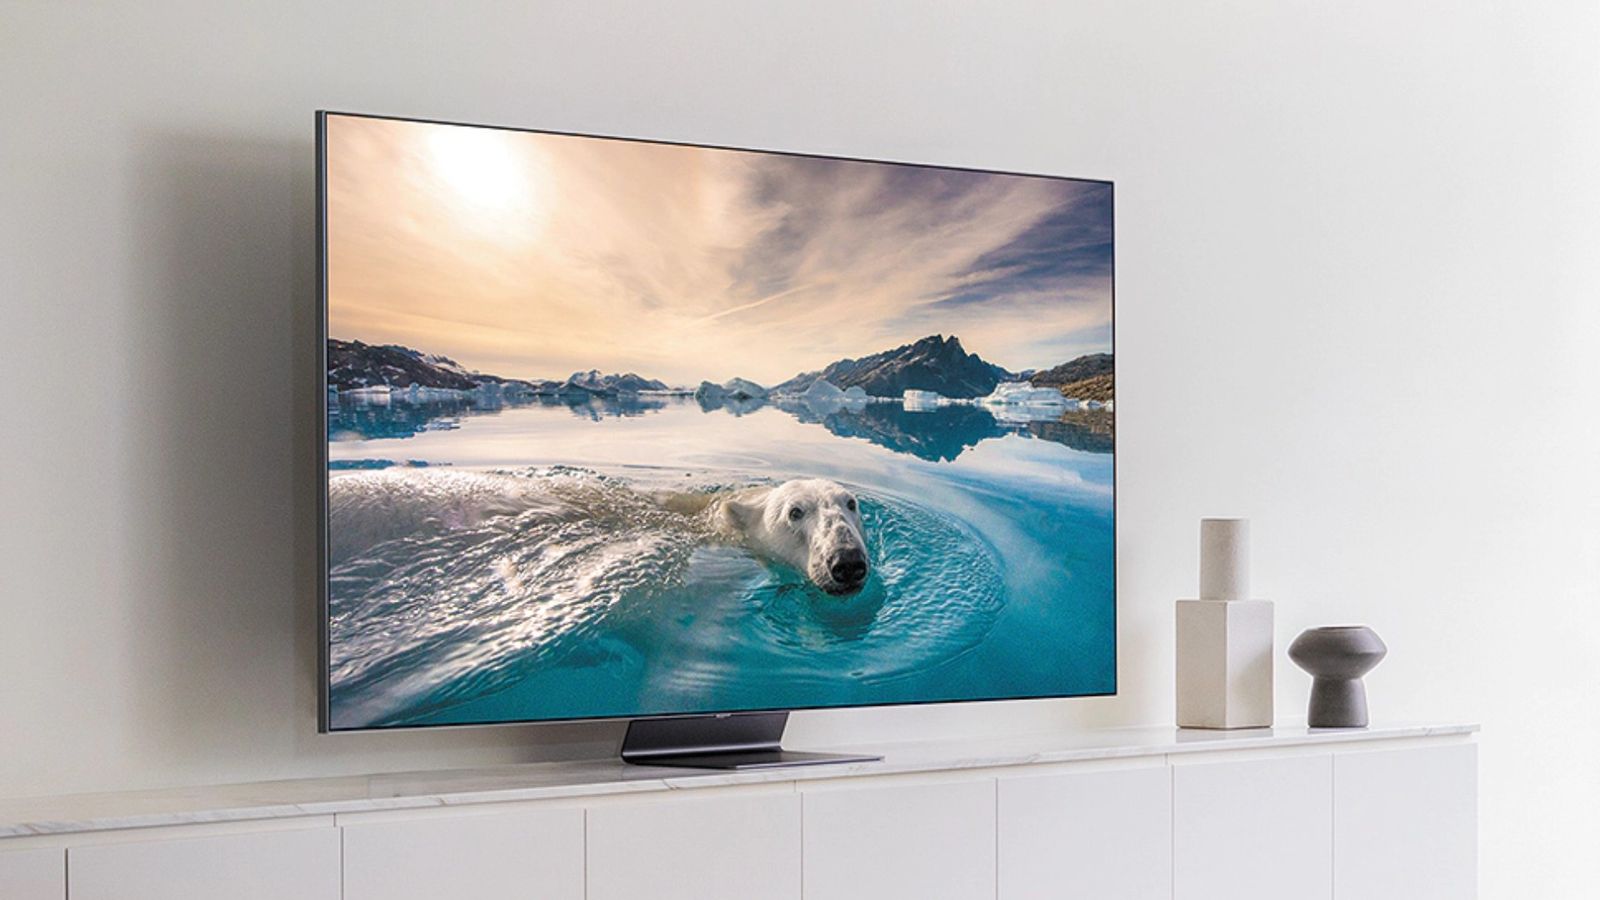 ULED vs QLED - An image of a QLED TV